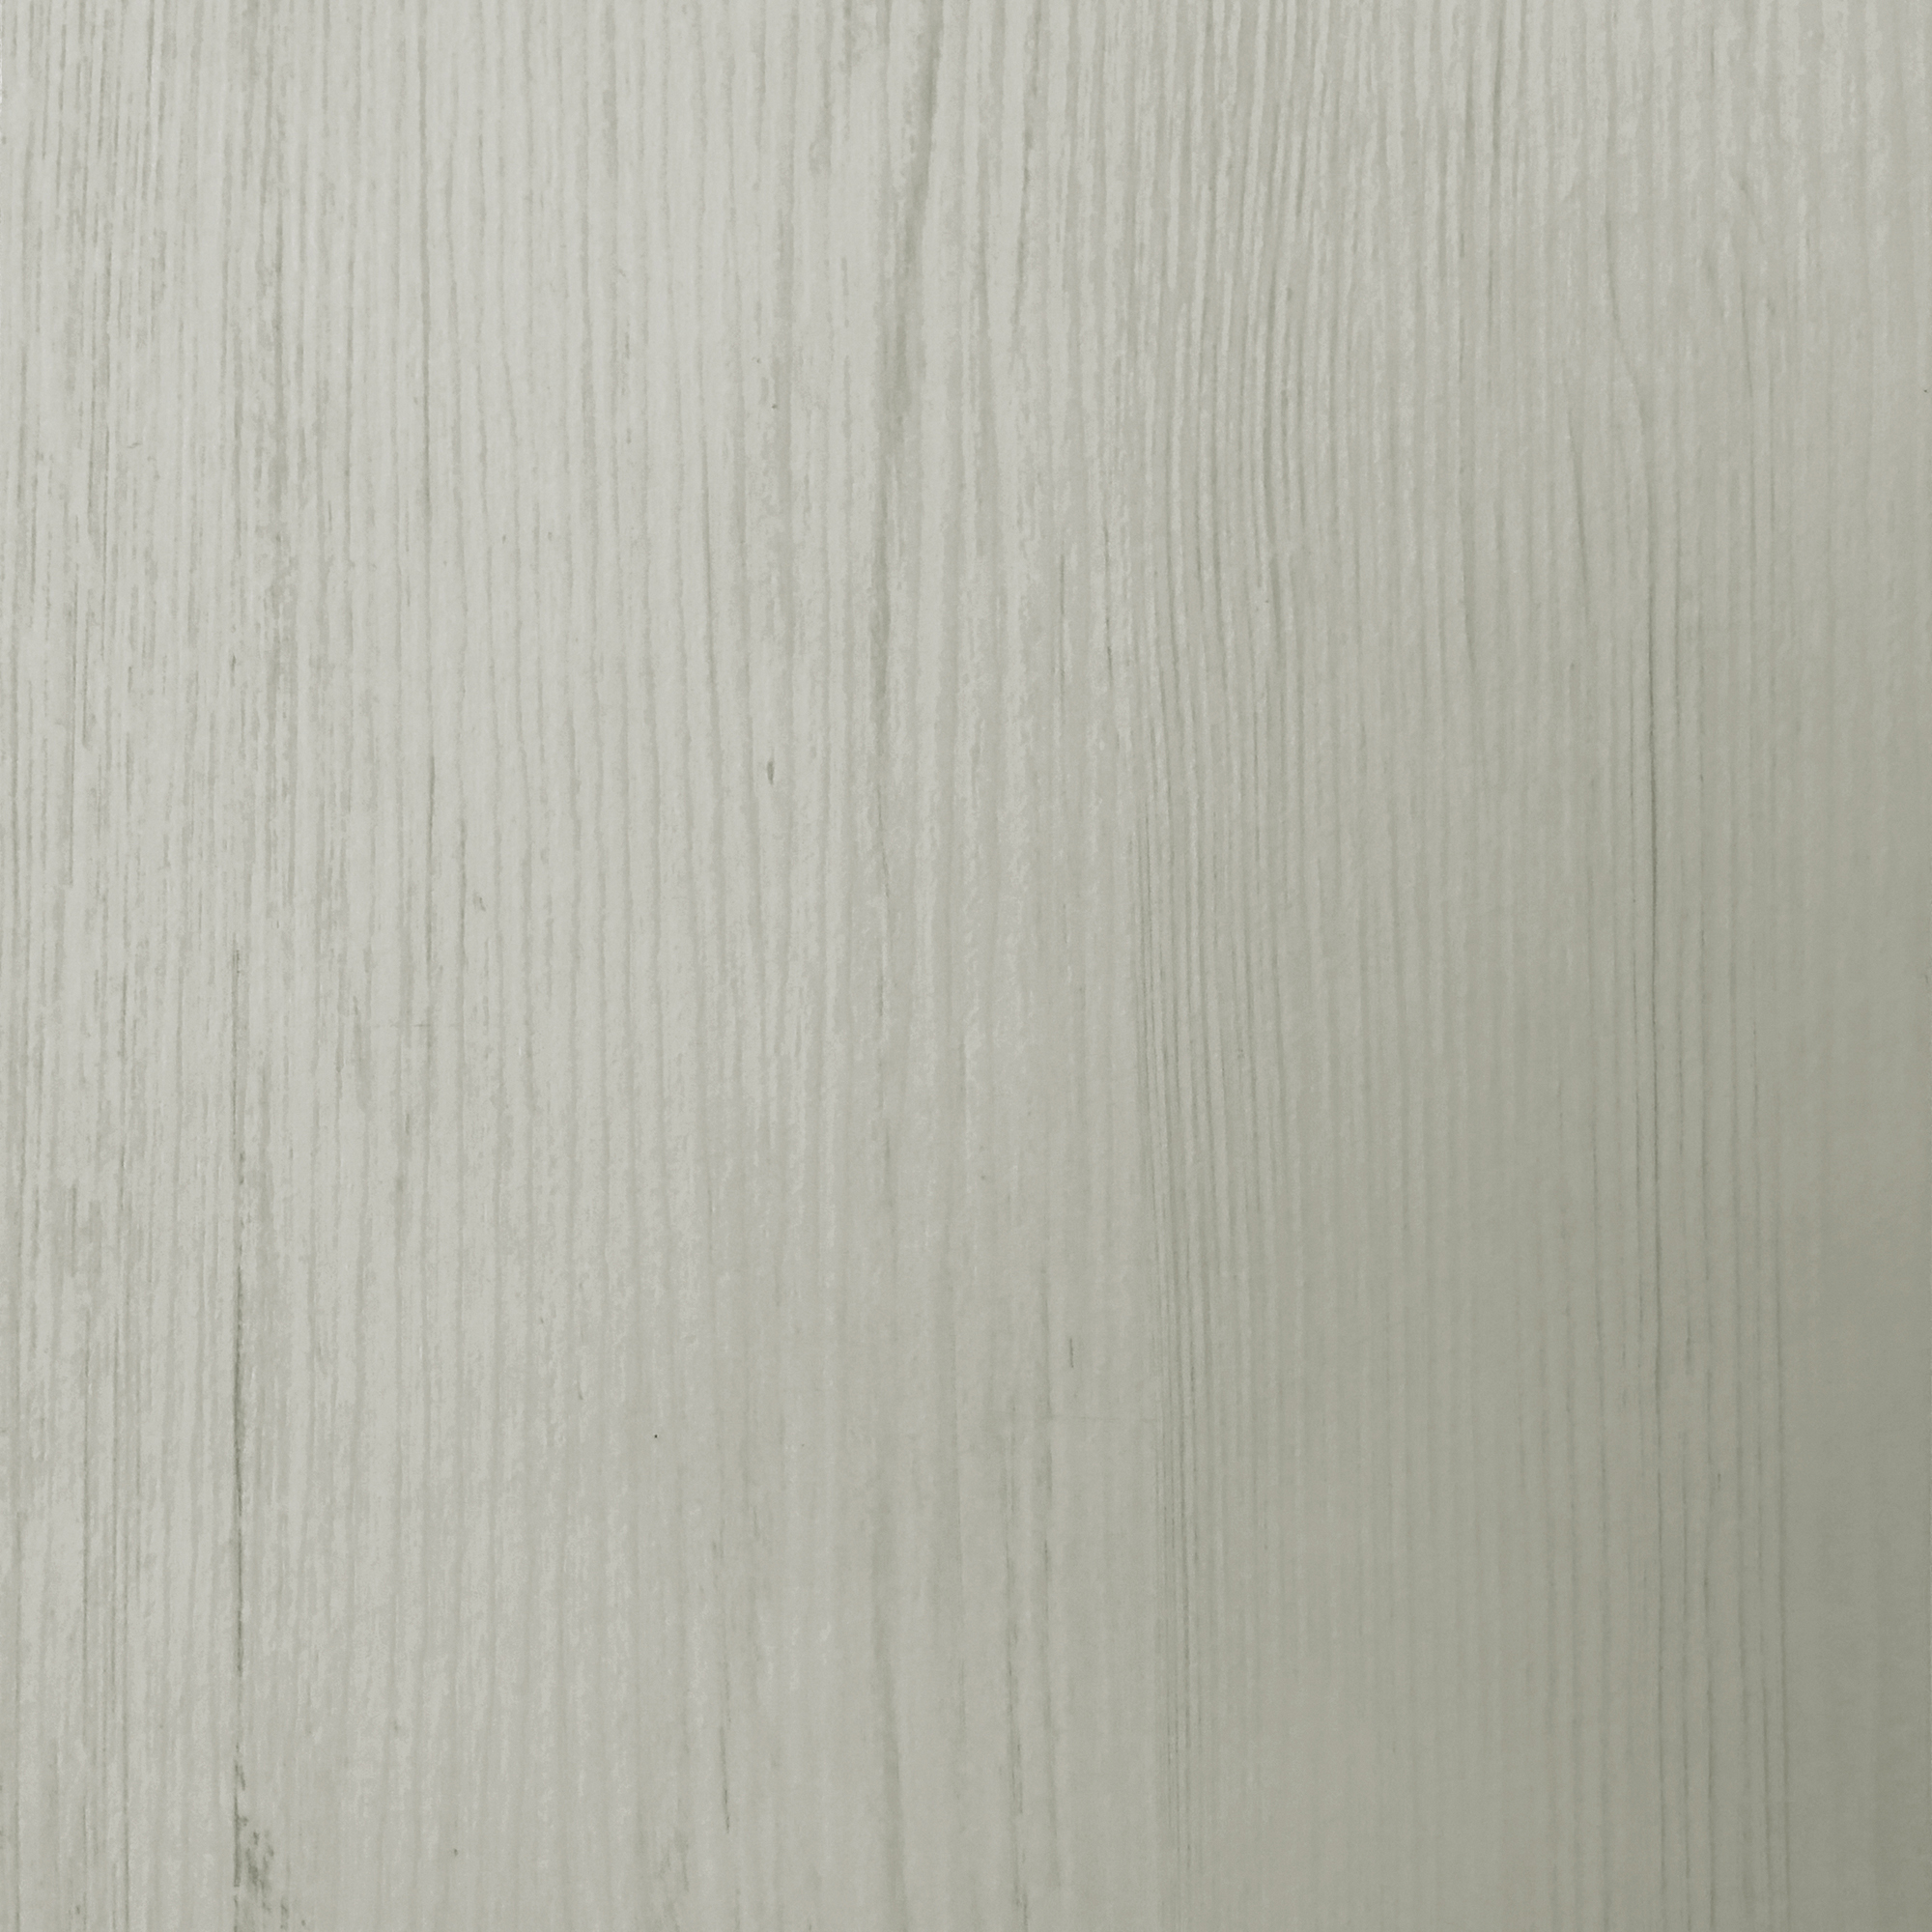 Image of Duarti By Calypso White Pine Postformed Slimline Worktop - 2000 x 230 x 22mm